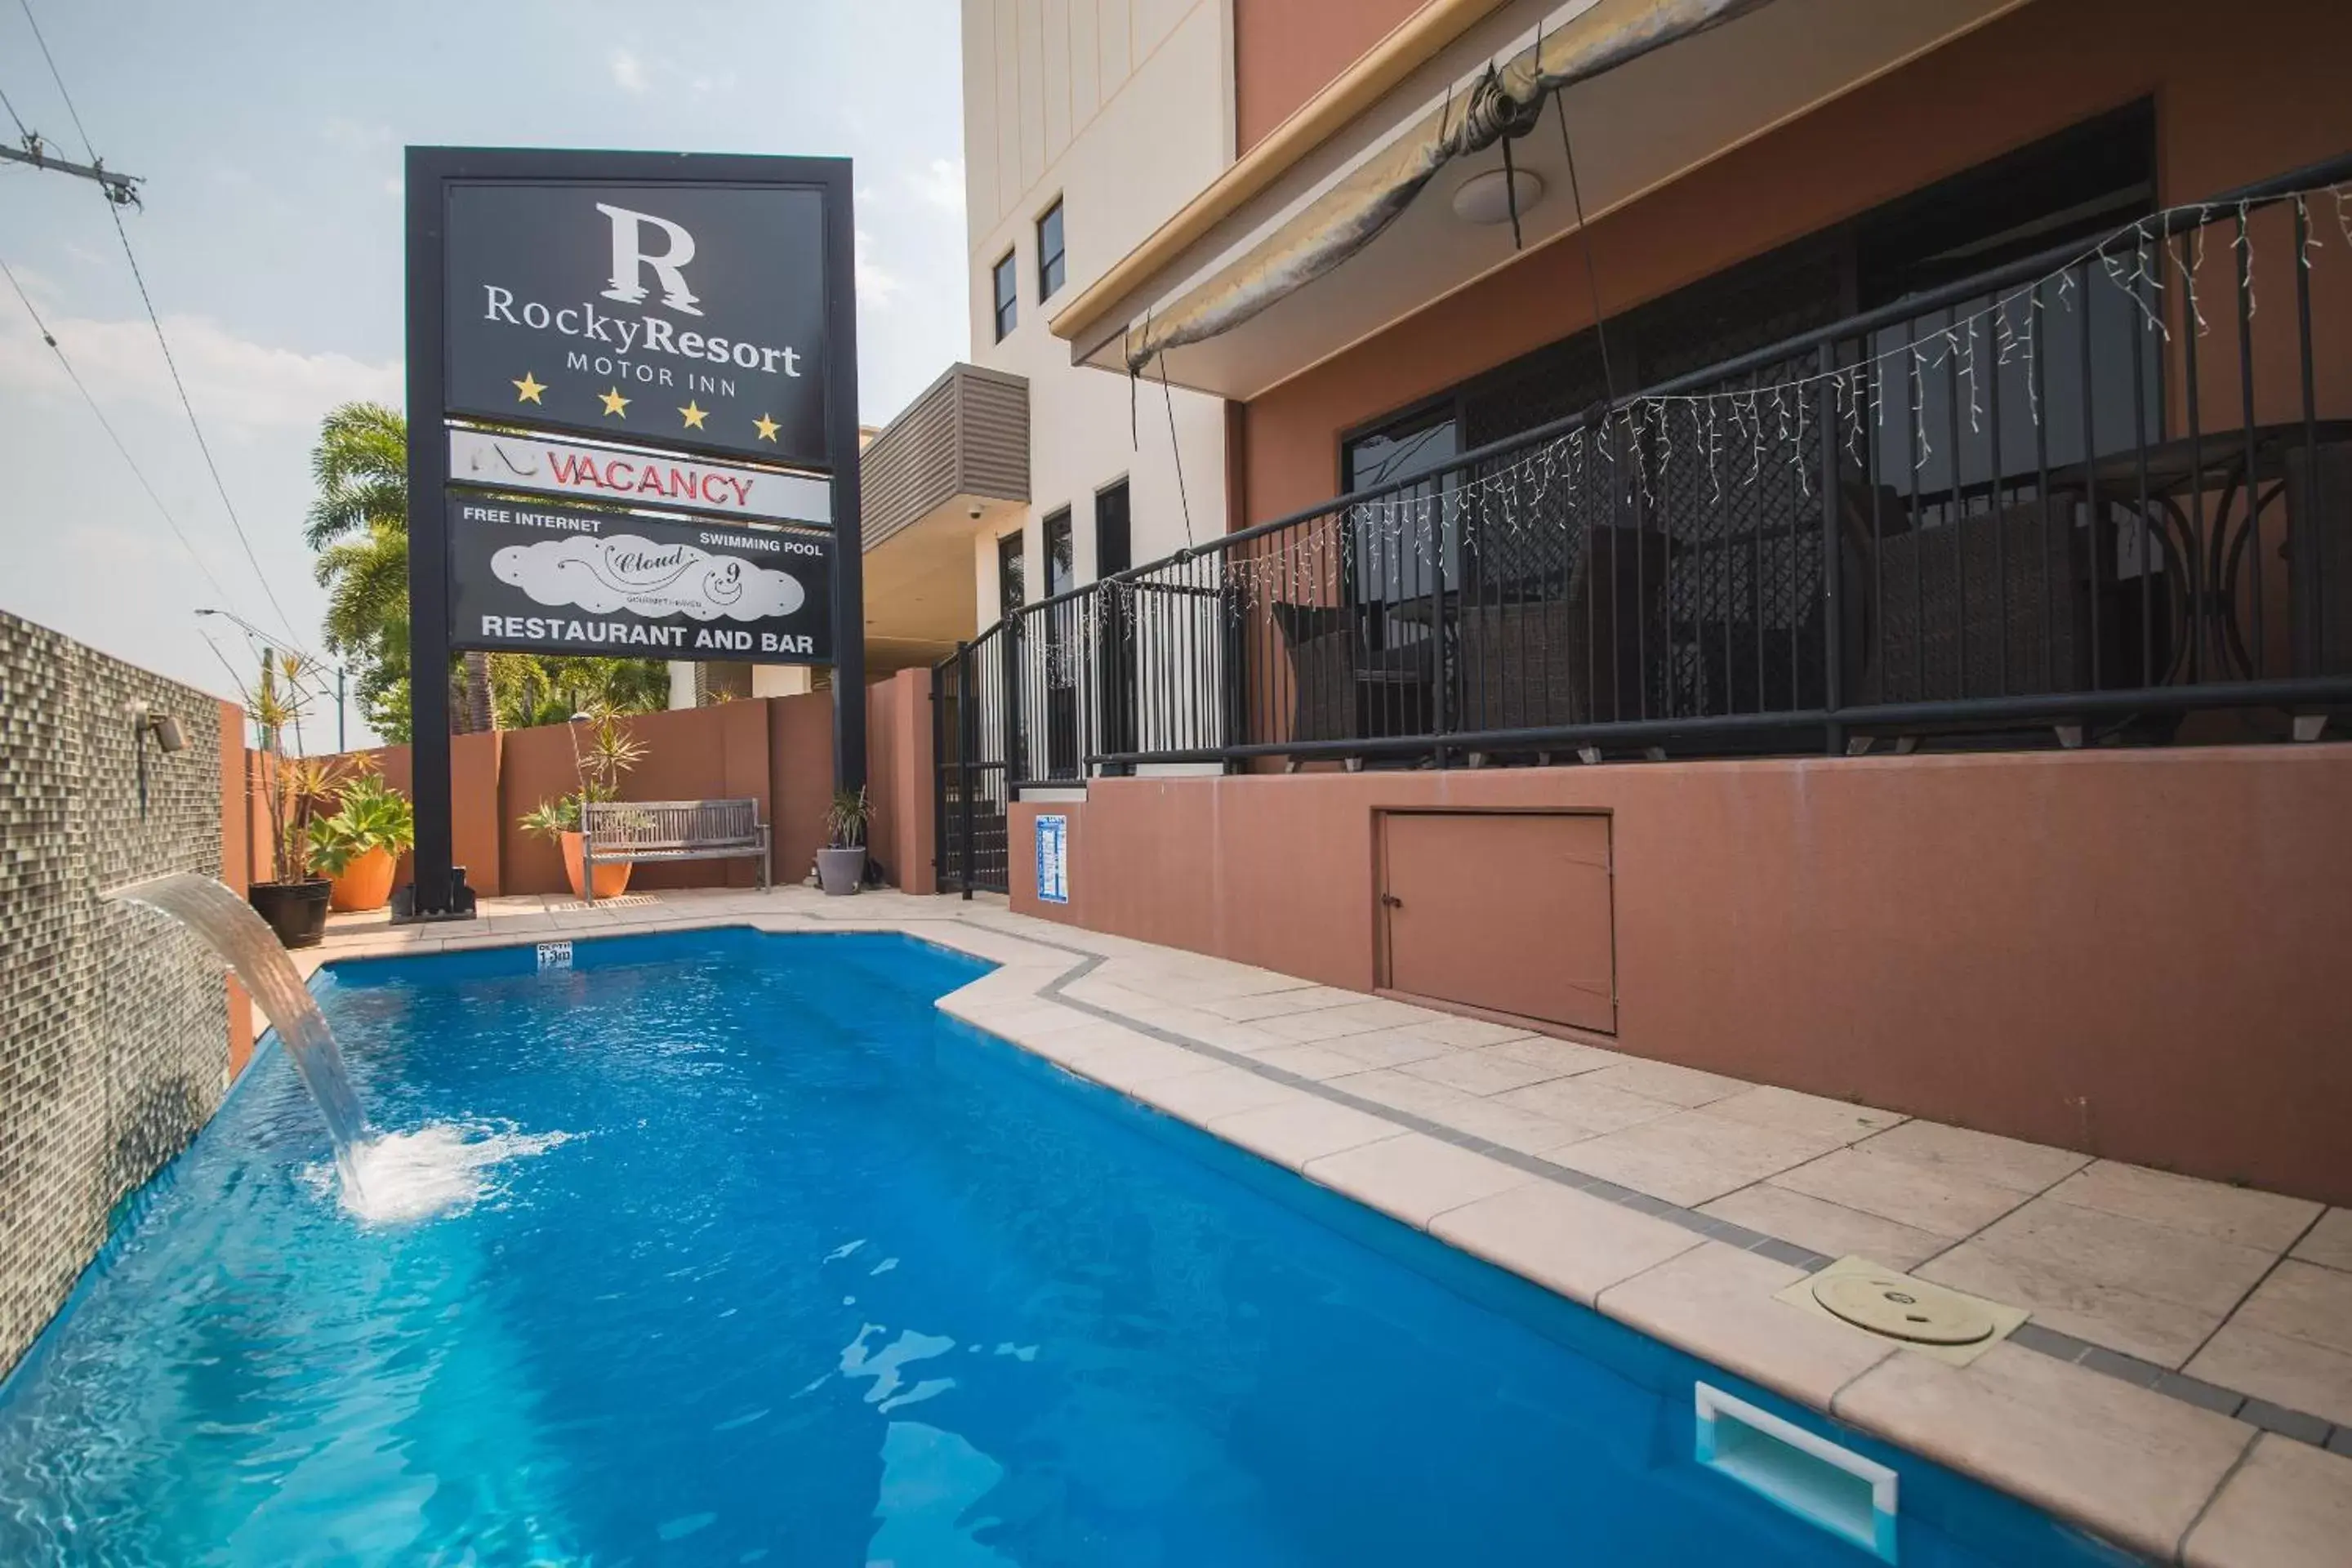 Swimming Pool in Rocky Resort Motor Inn